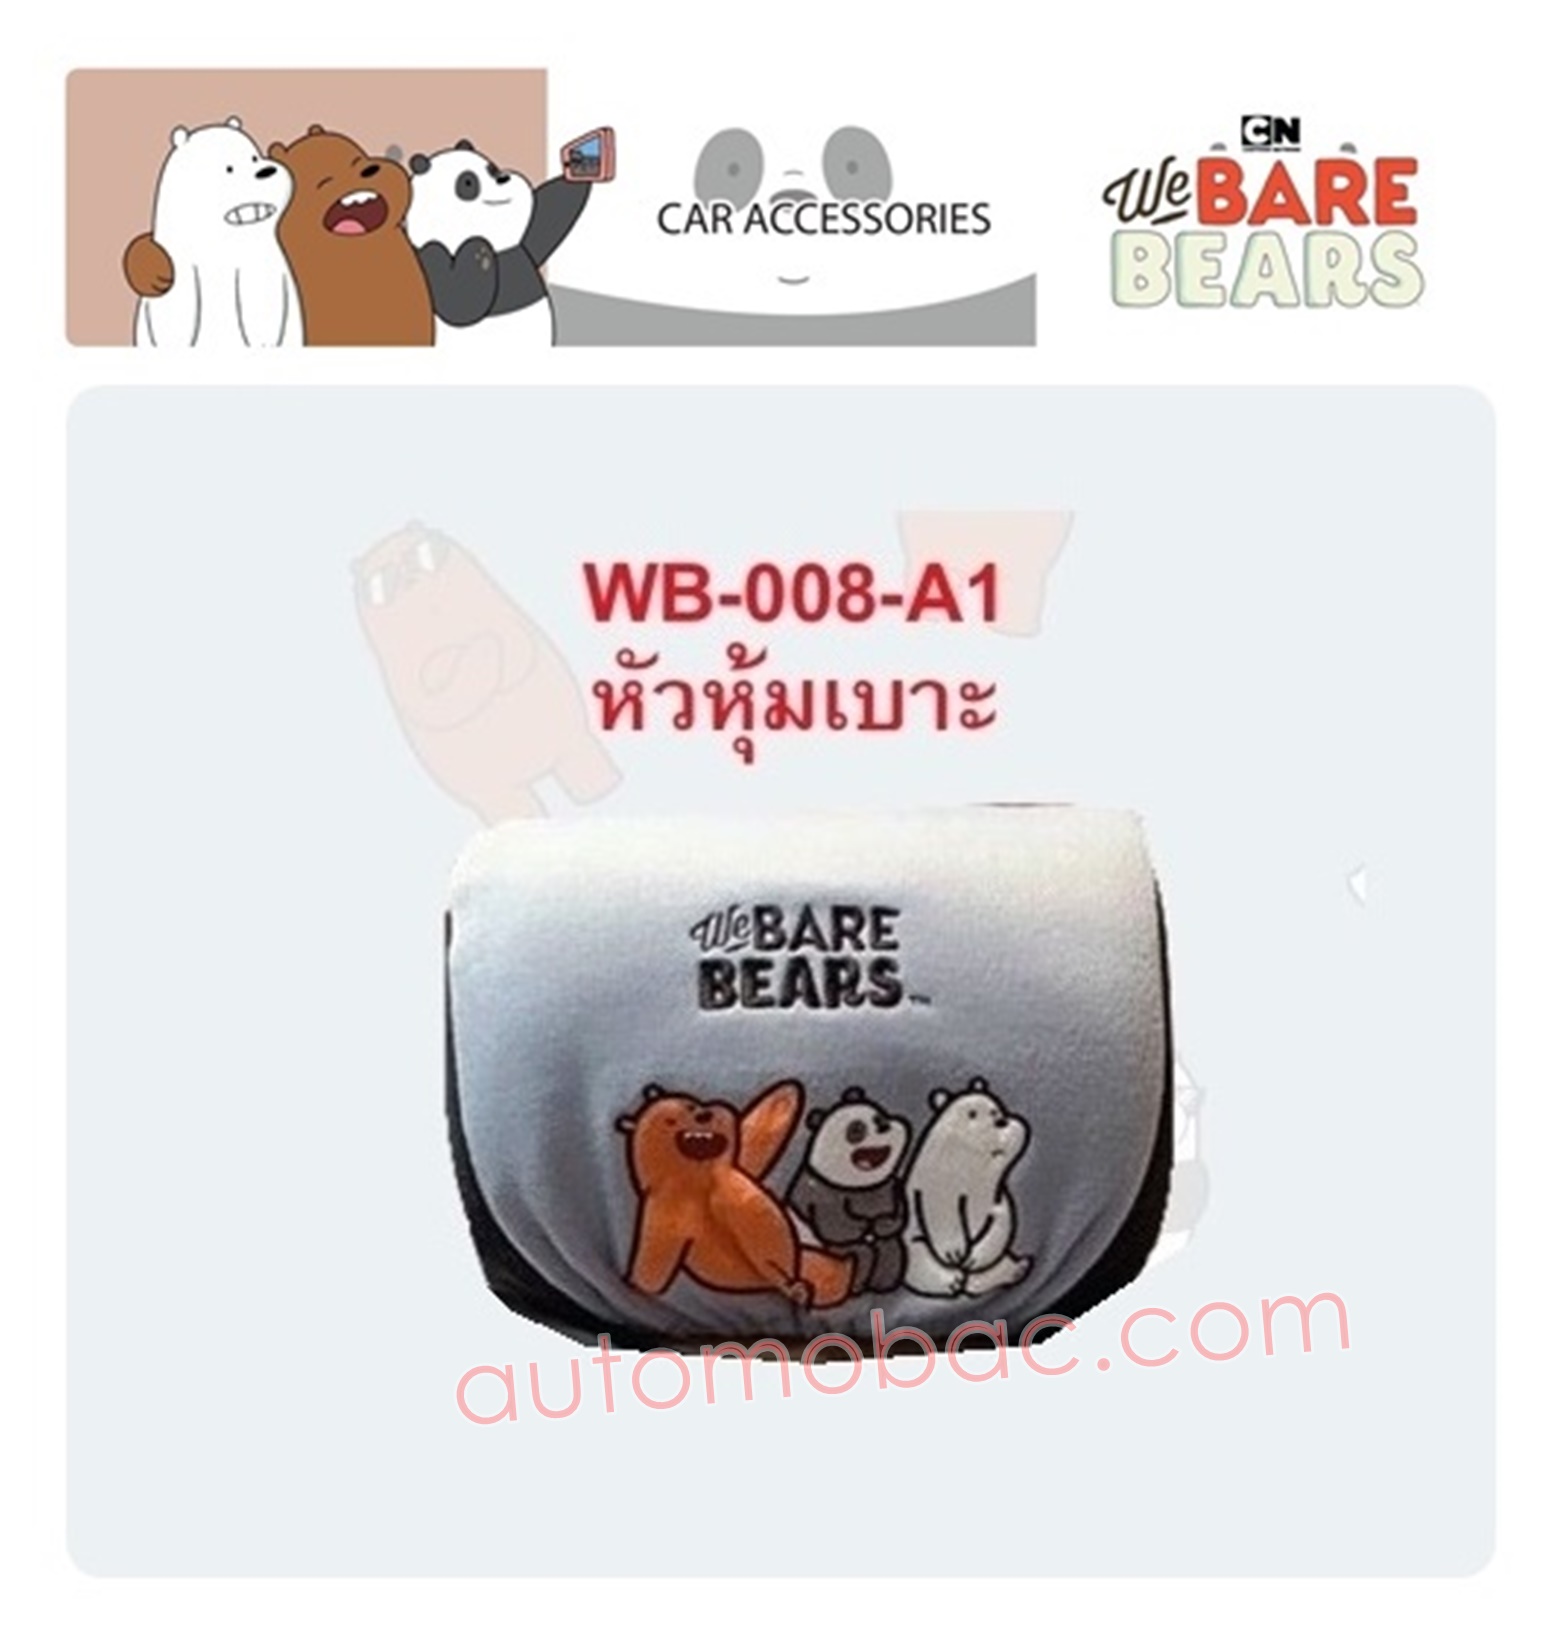 We Bare Bears ที่หุ้มหัวเบาะ 1 ชิ้น ใช้หุ้มหัวเบาะรถยนต์ ปกป้องหัวเบาะจากความร้อน รอยขีดข่วน แท้